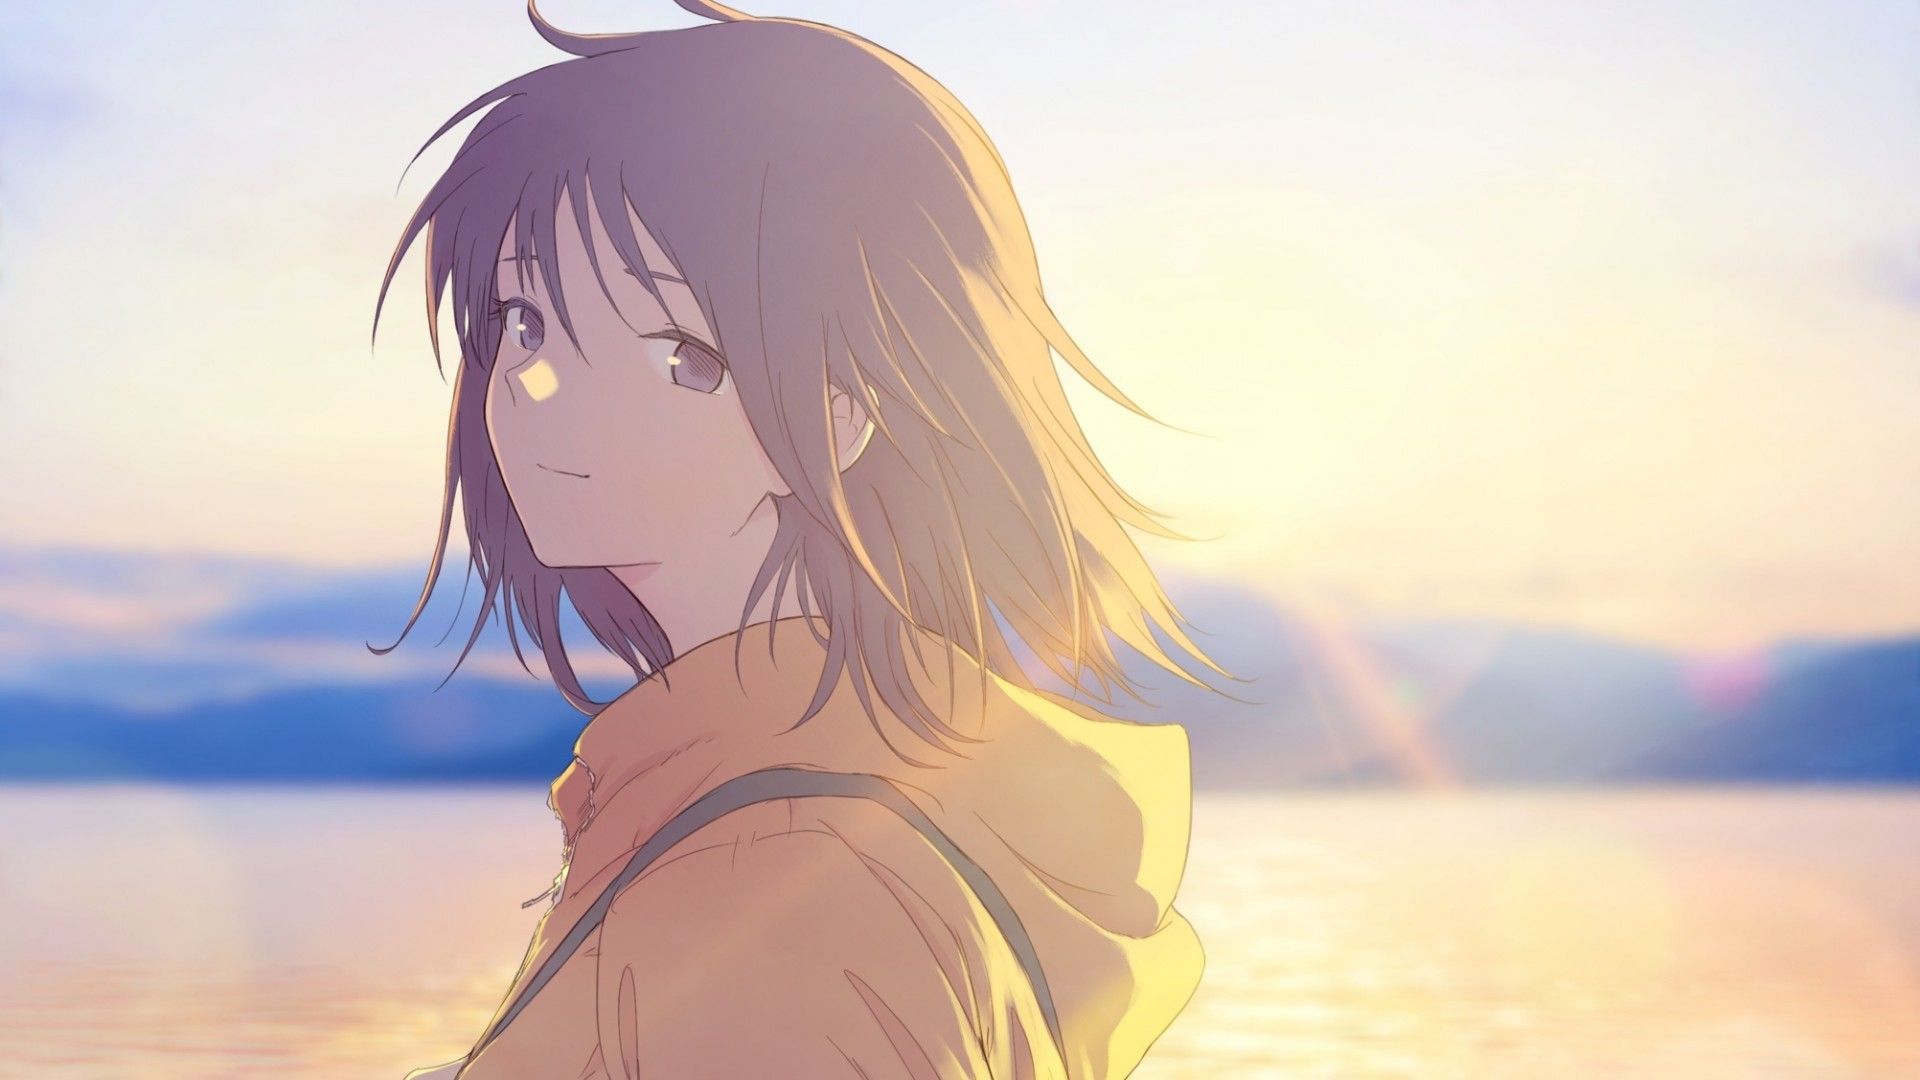 Download 1920x1080 Anime Girl, Profile View, Sunlight, Sea, Beach